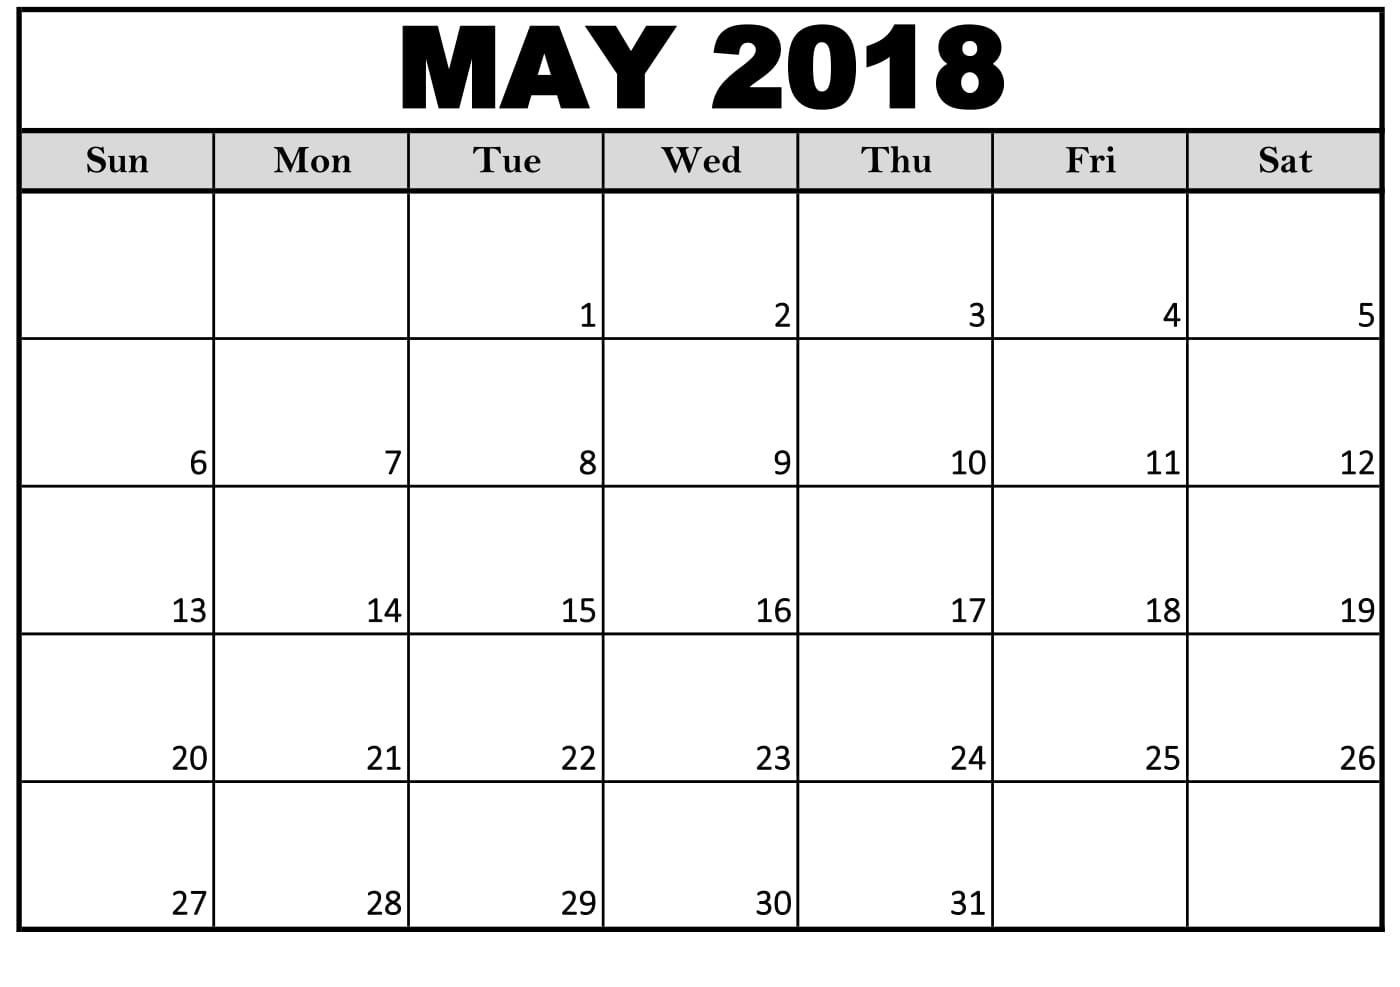 may-2018-calendar-2018-printable-calendars-posters-images-wallpapers-free